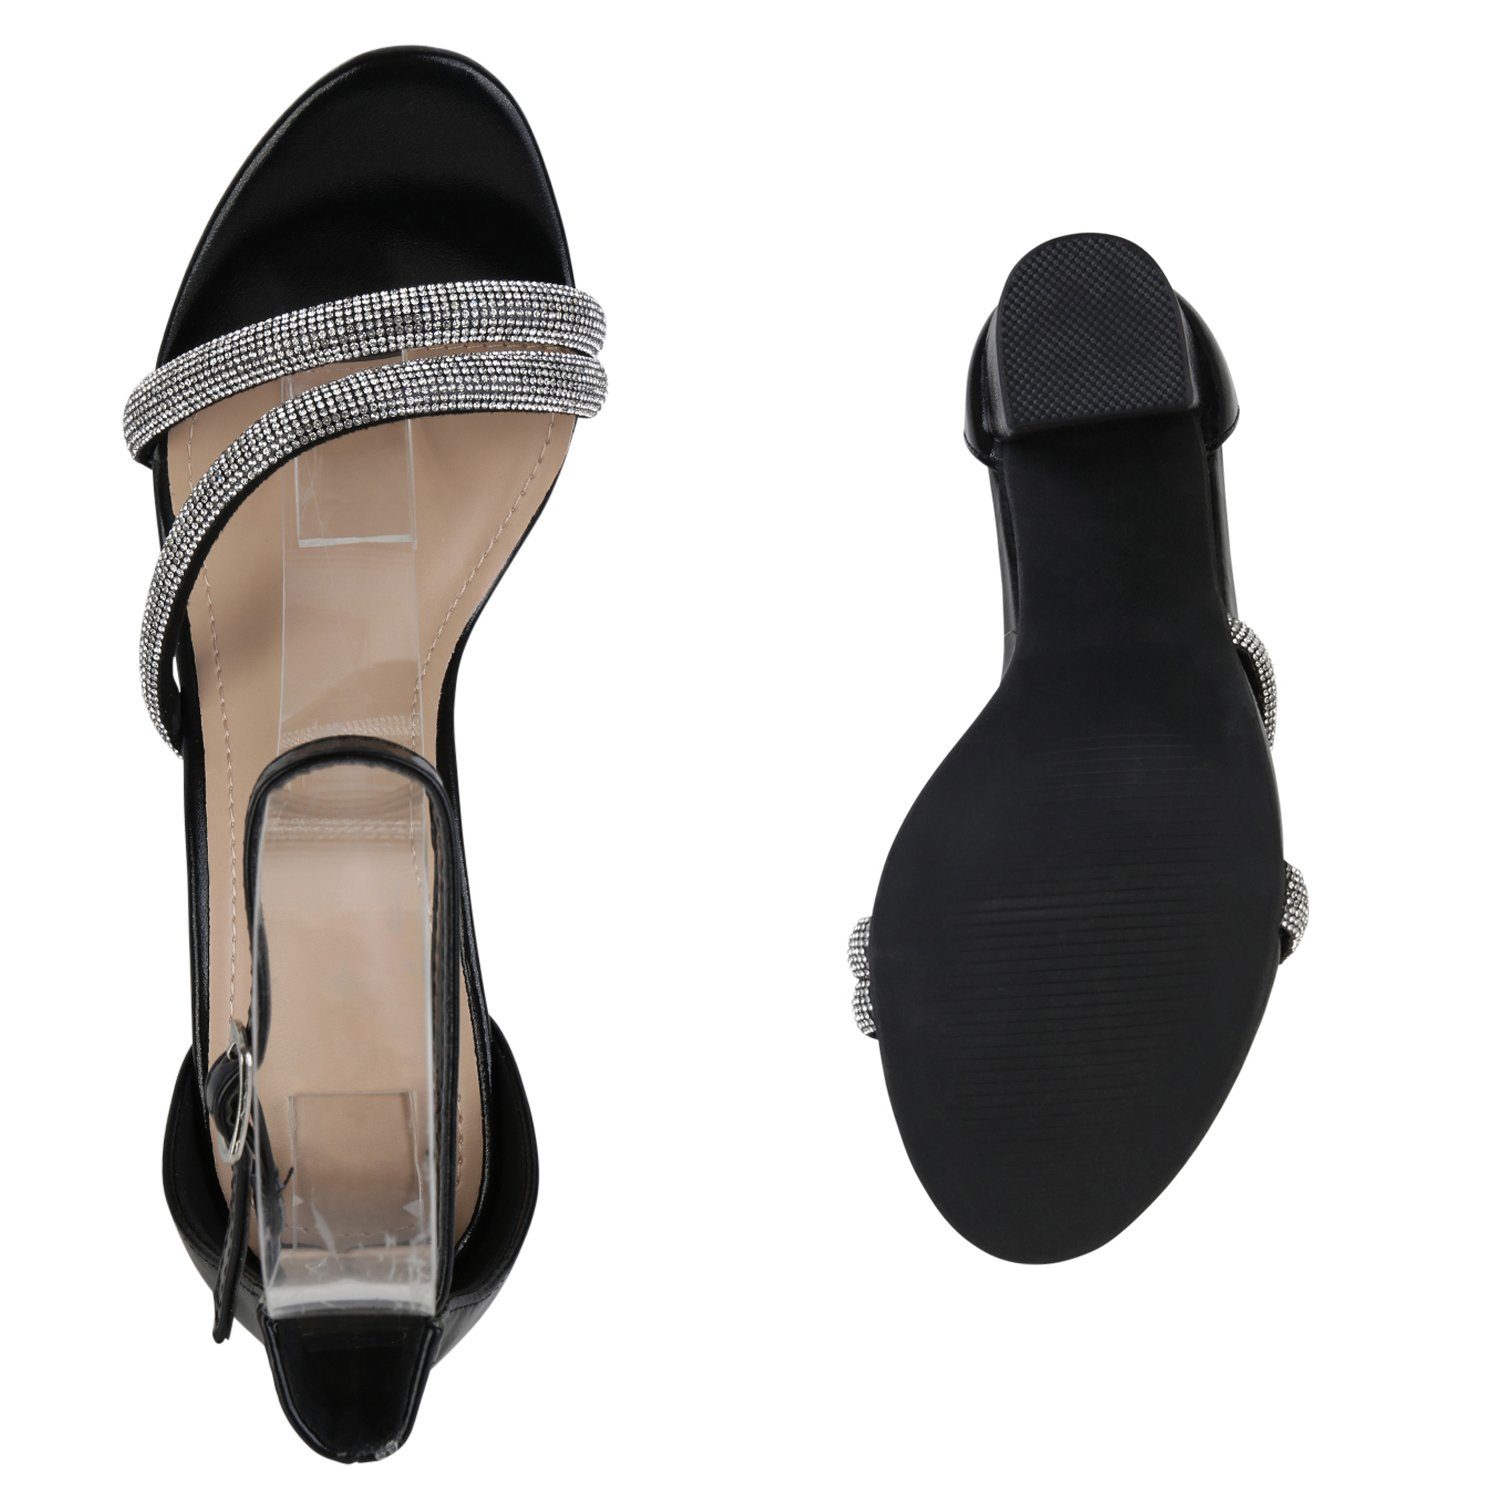 High-Heel-Sandalette Schwarz 840141 Schuhe HILL VAN Bequeme